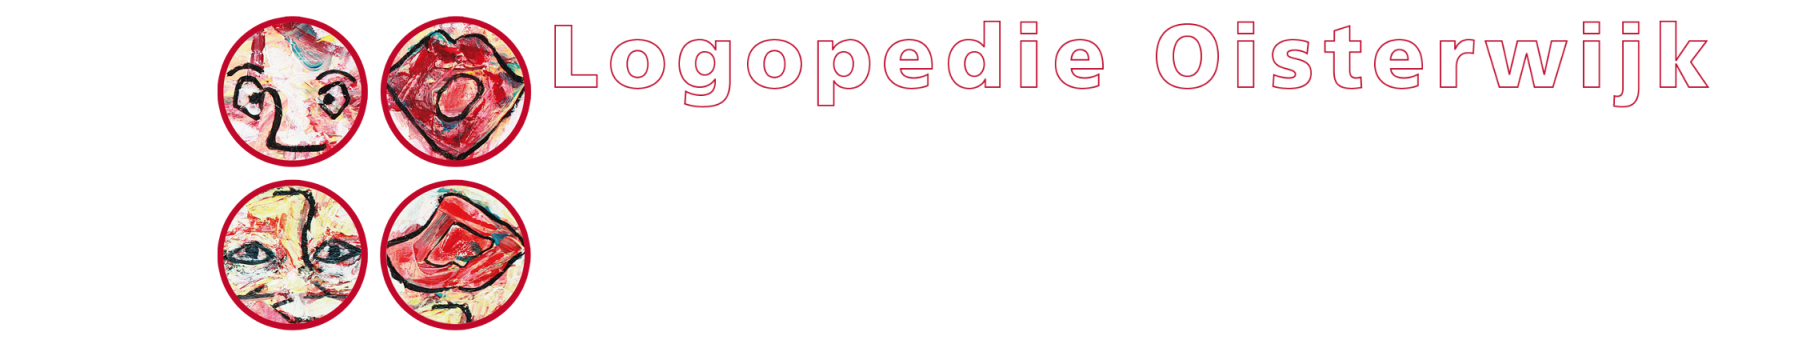 Logopedie Oisterwijk